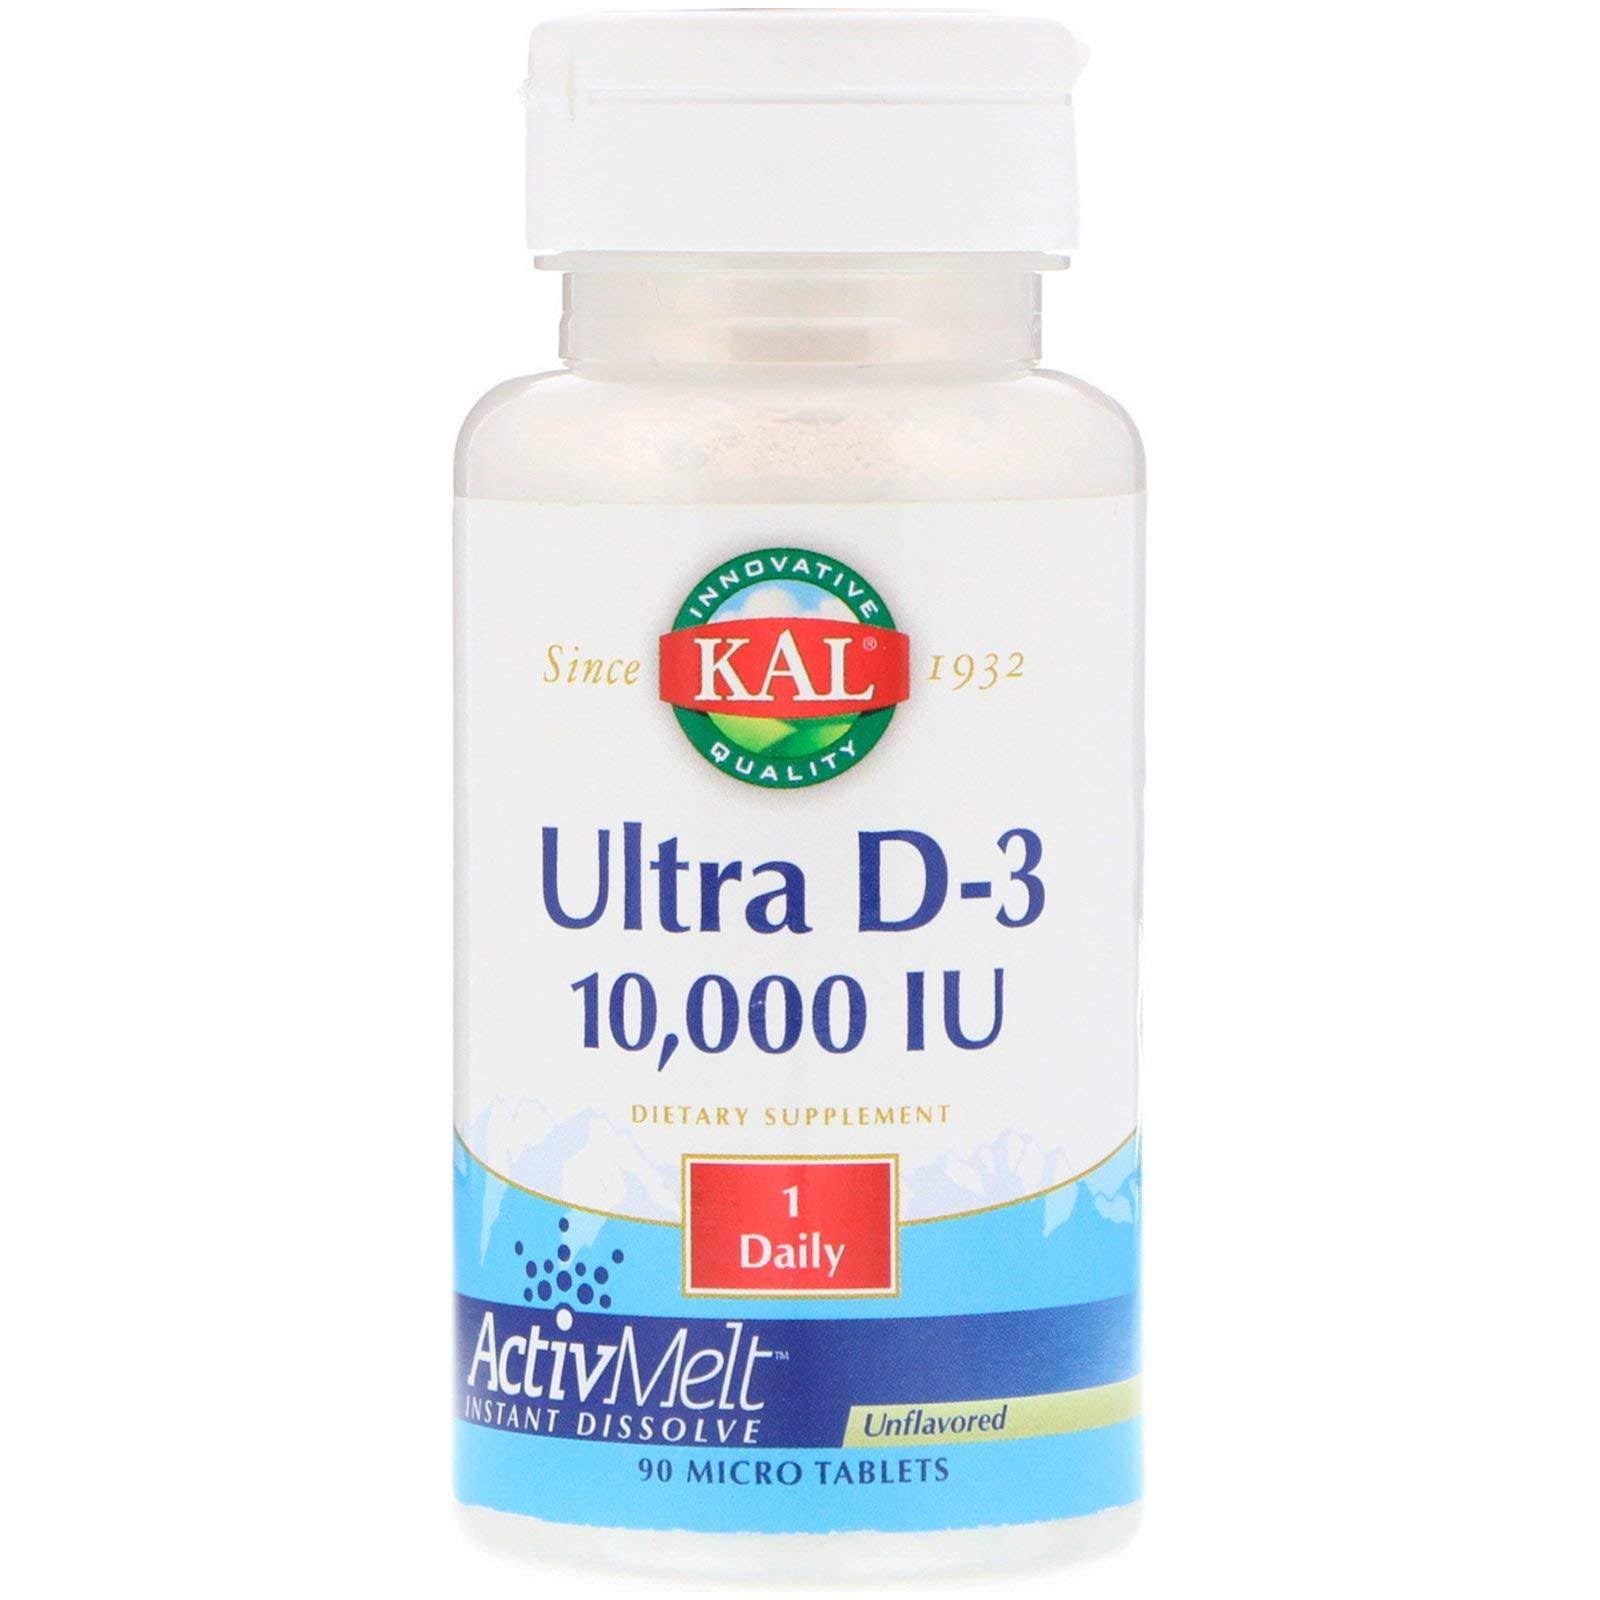 Kal Ultra D-3 10000 IU ActivMelt - 90 Count